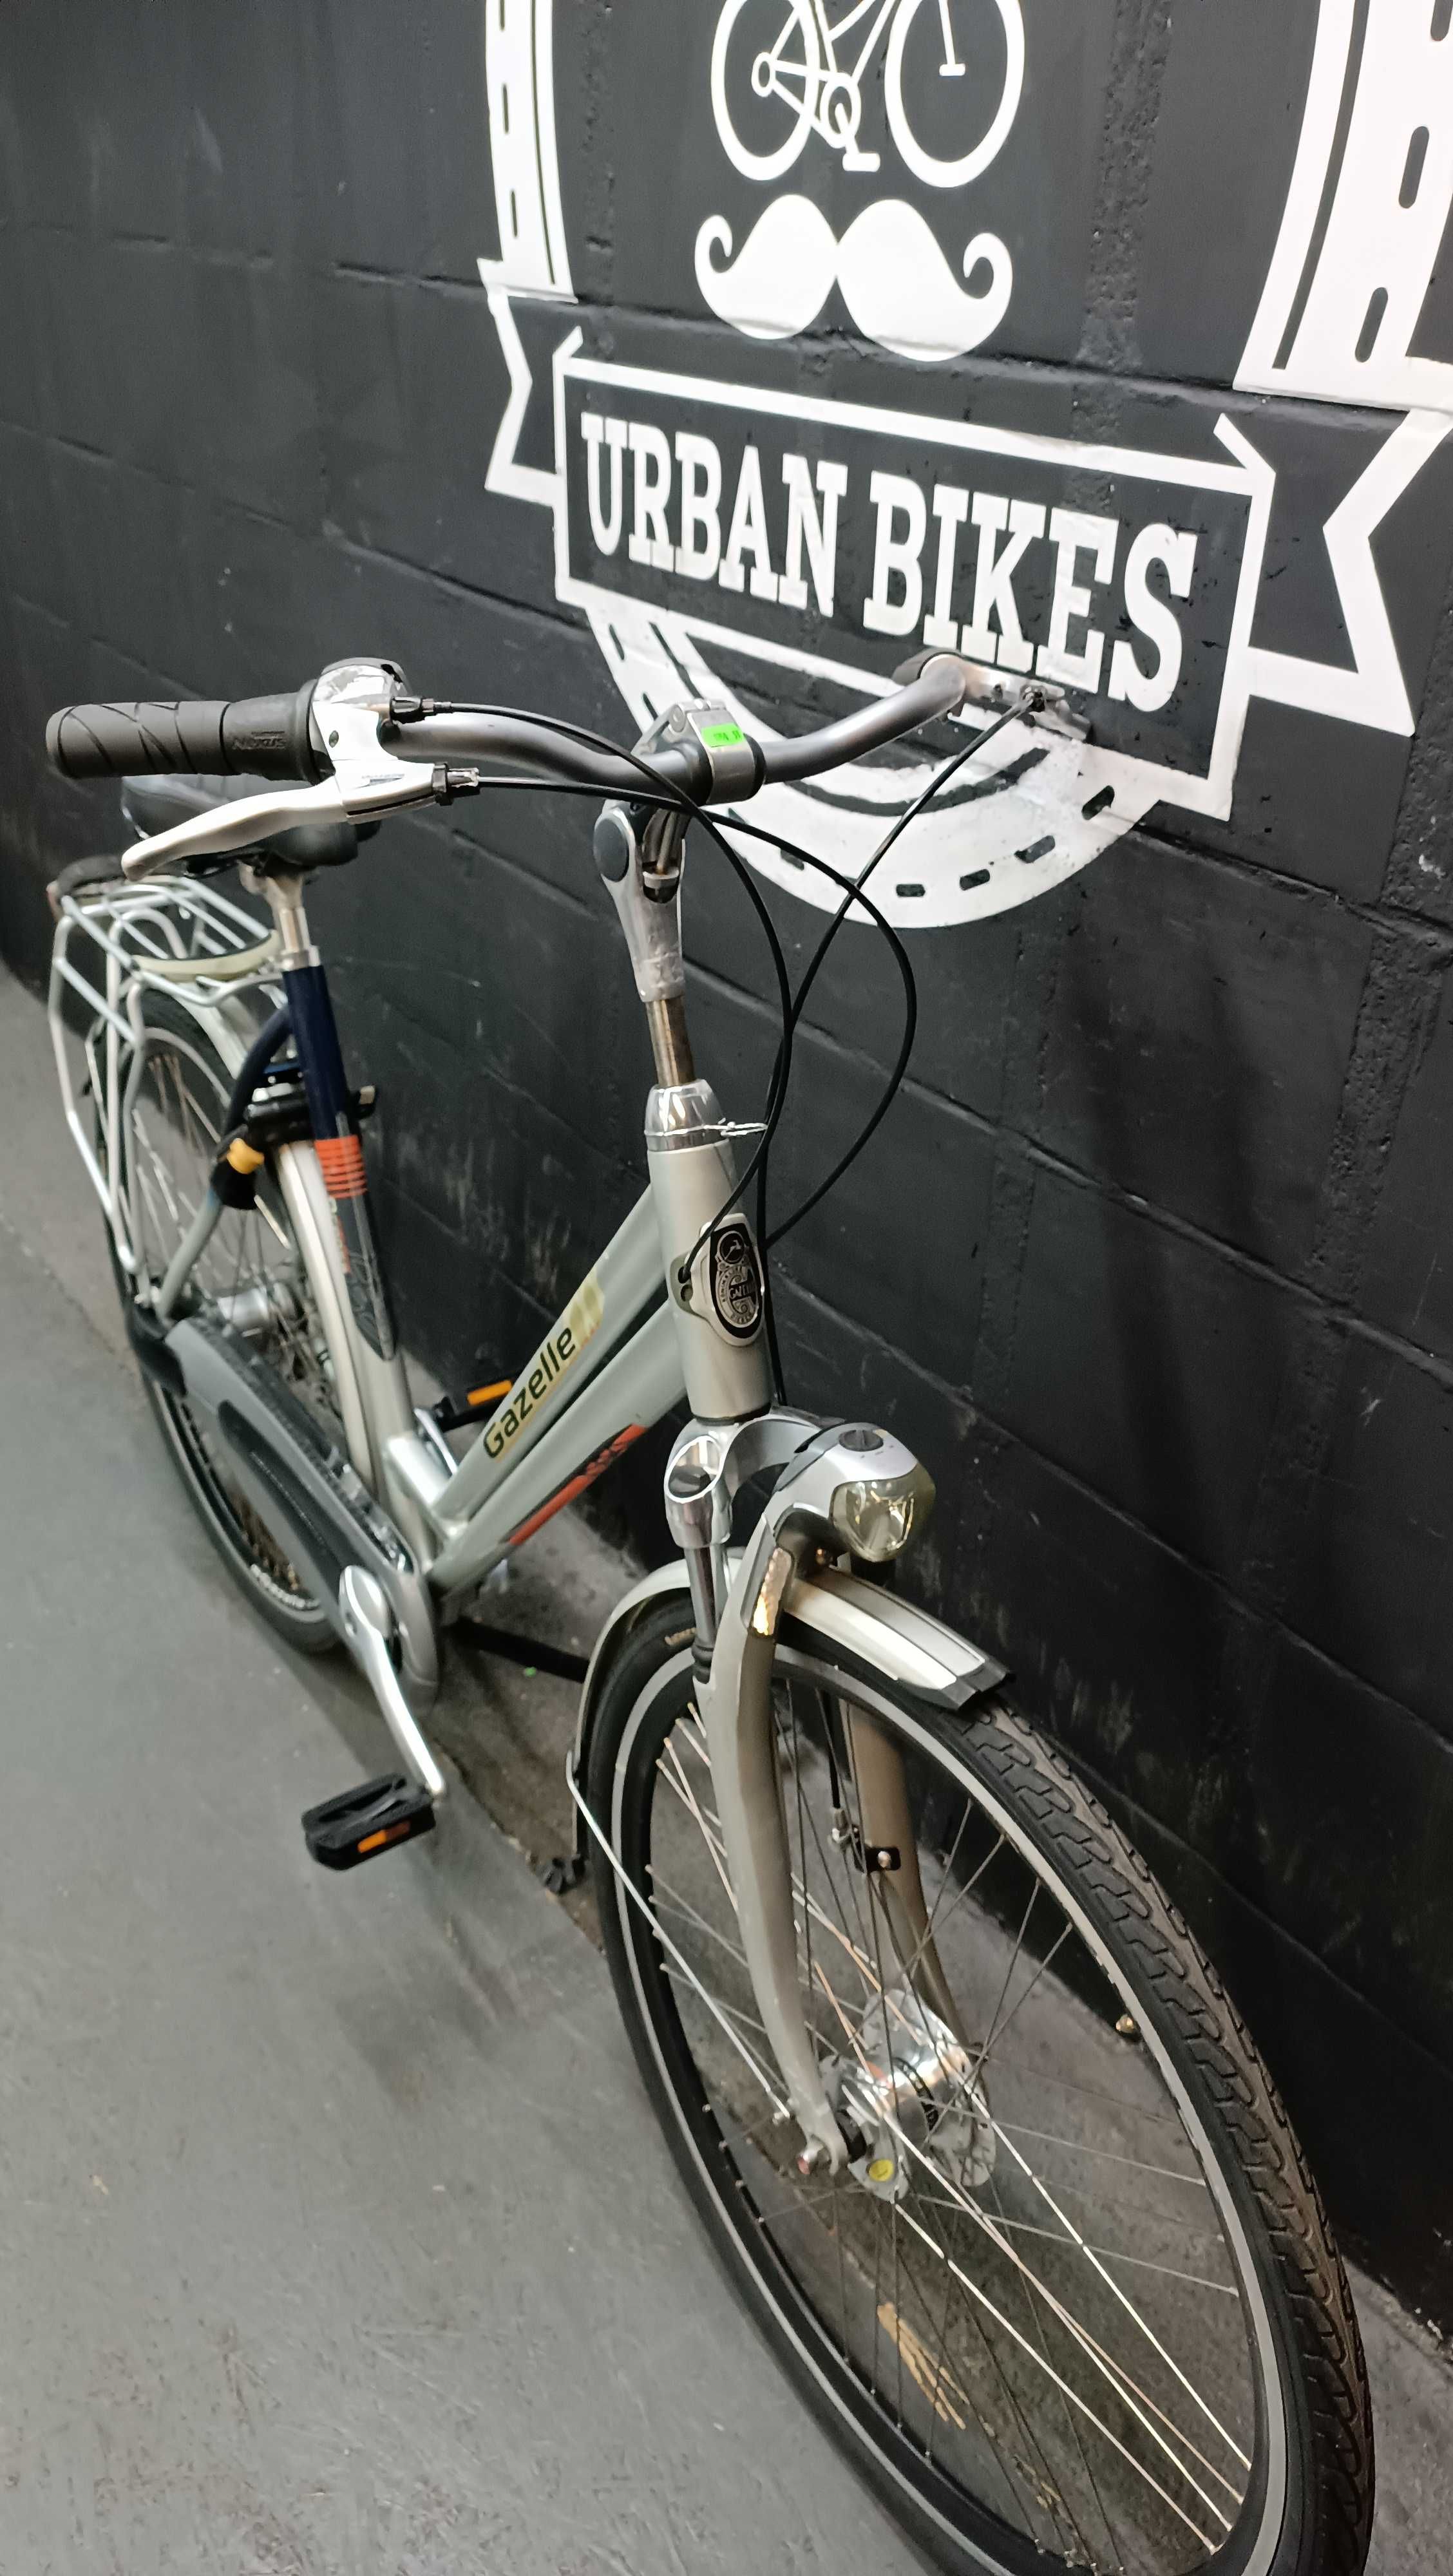 GAZELLE Orange damski rower miejski 57cm nexus 8 URBAN BIKES